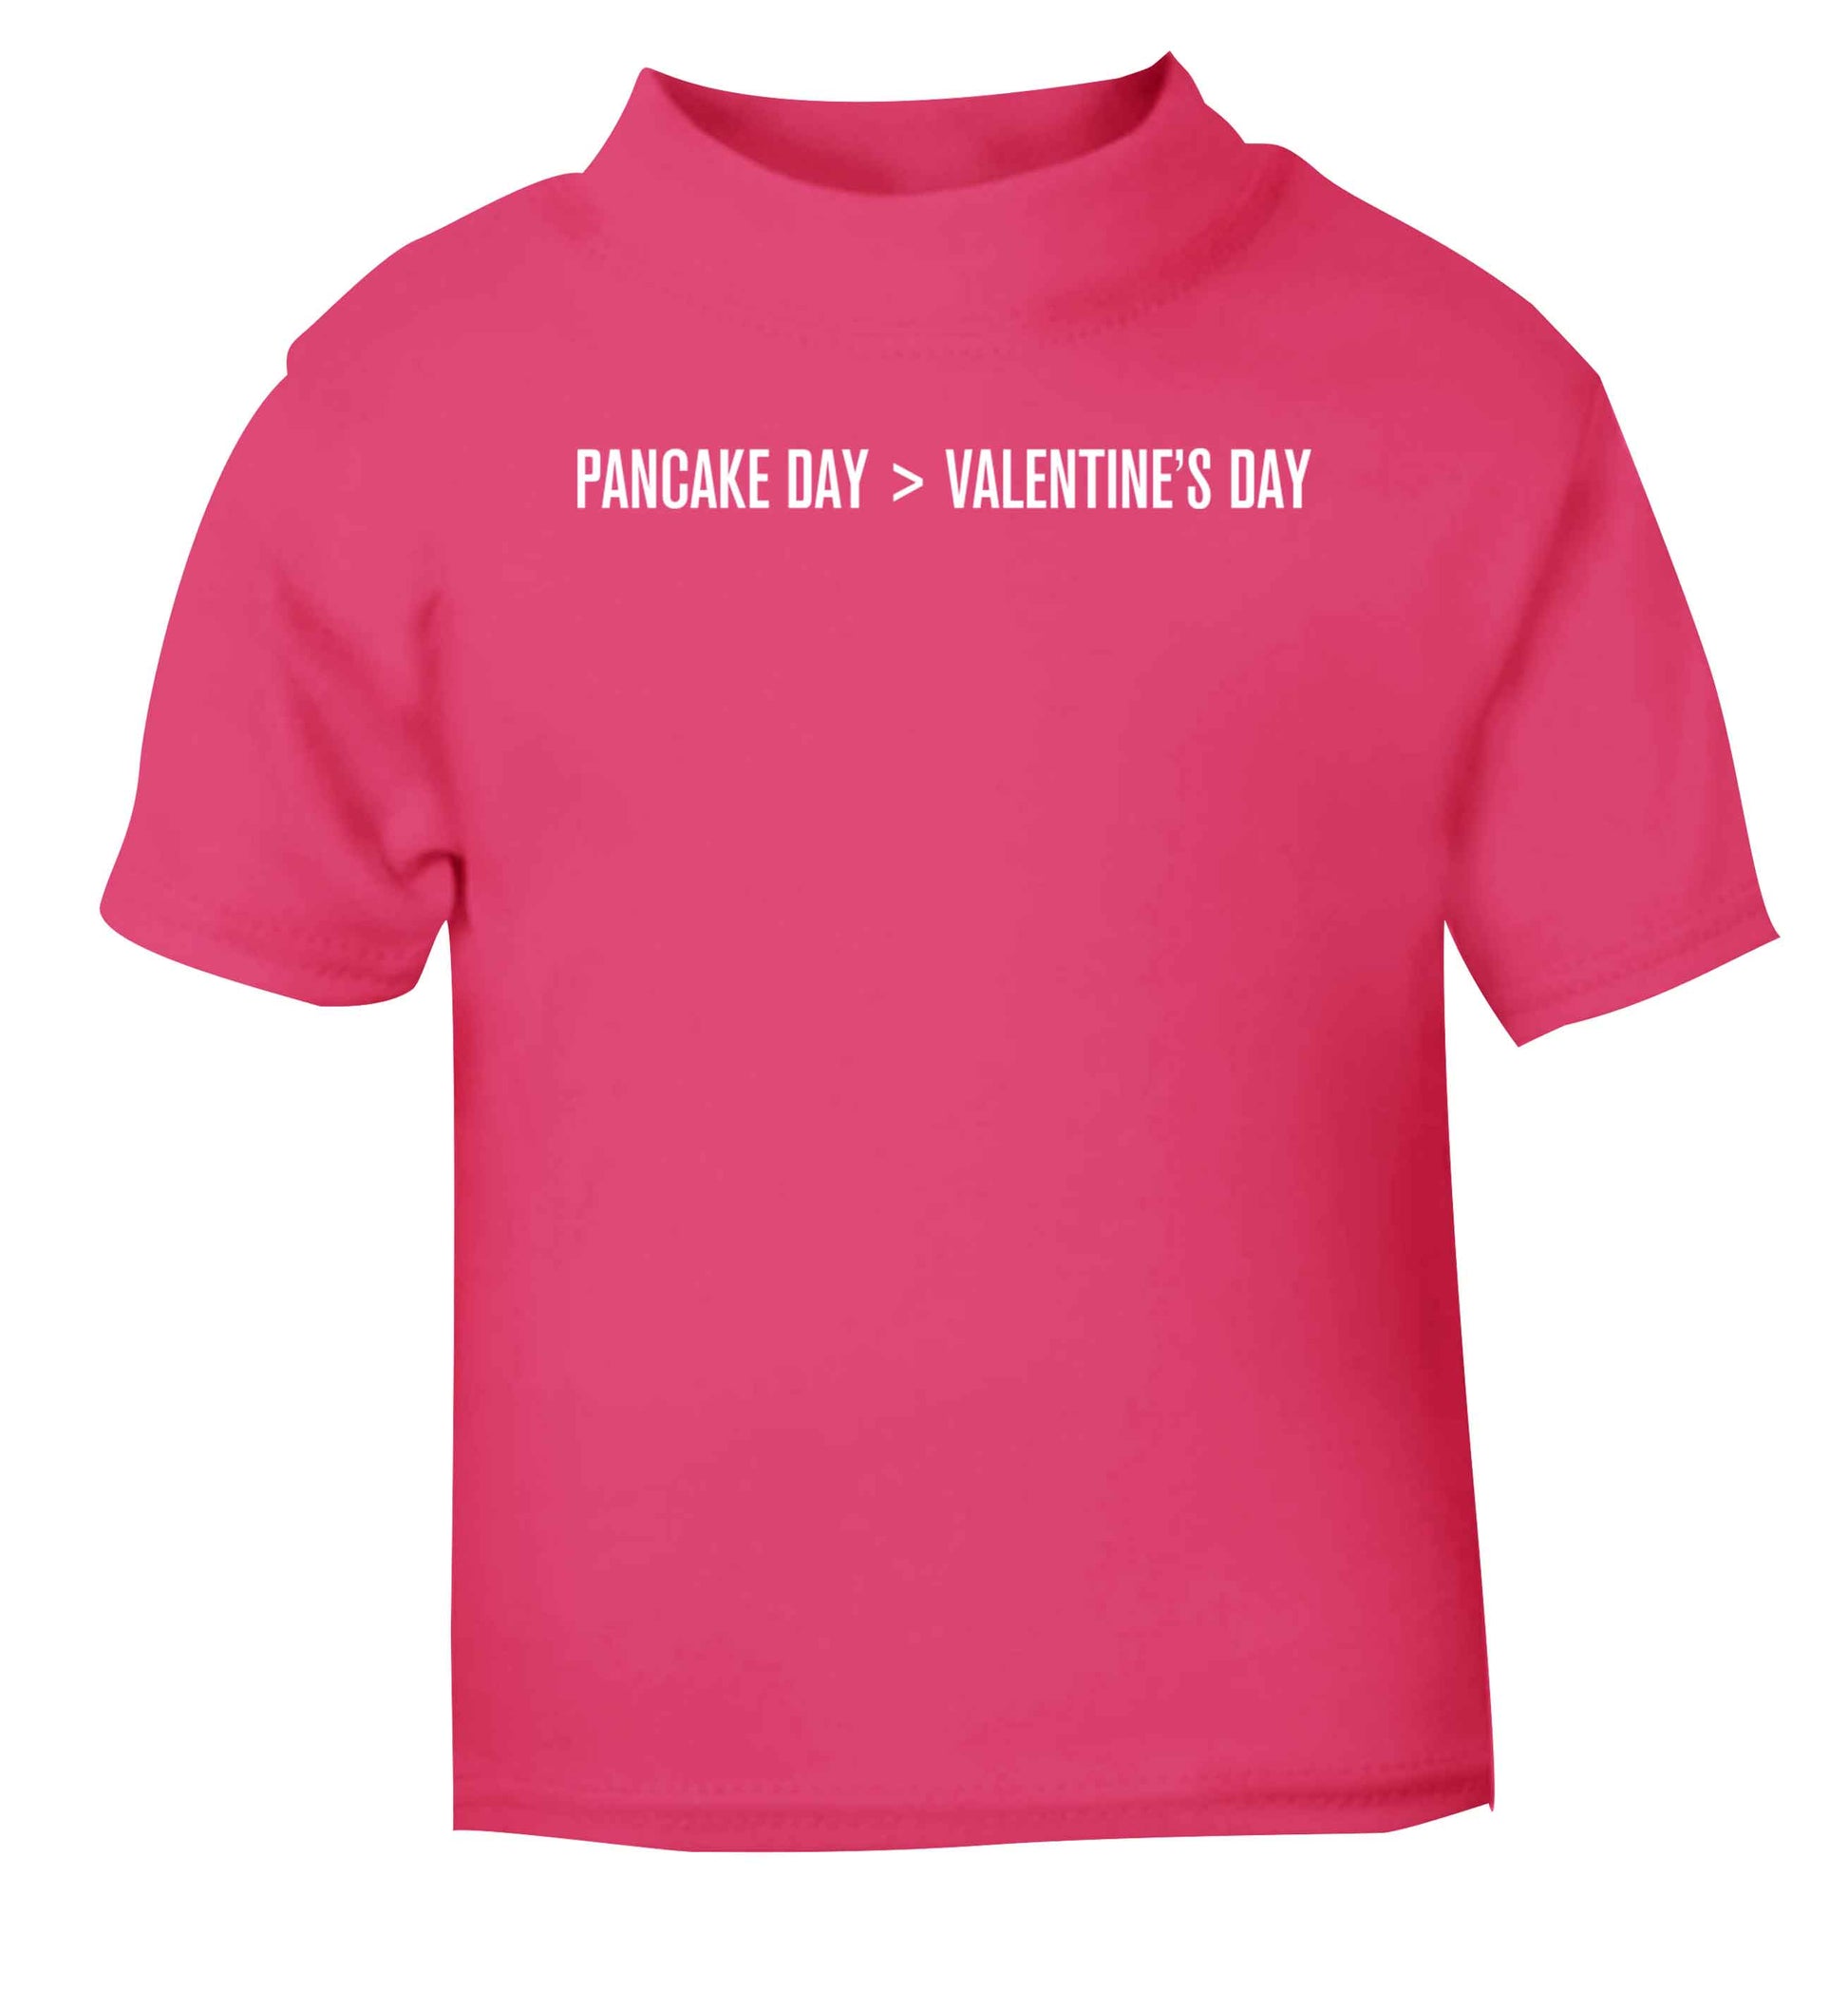 Pancake day > valentines day pink baby toddler Tshirt 2 Years